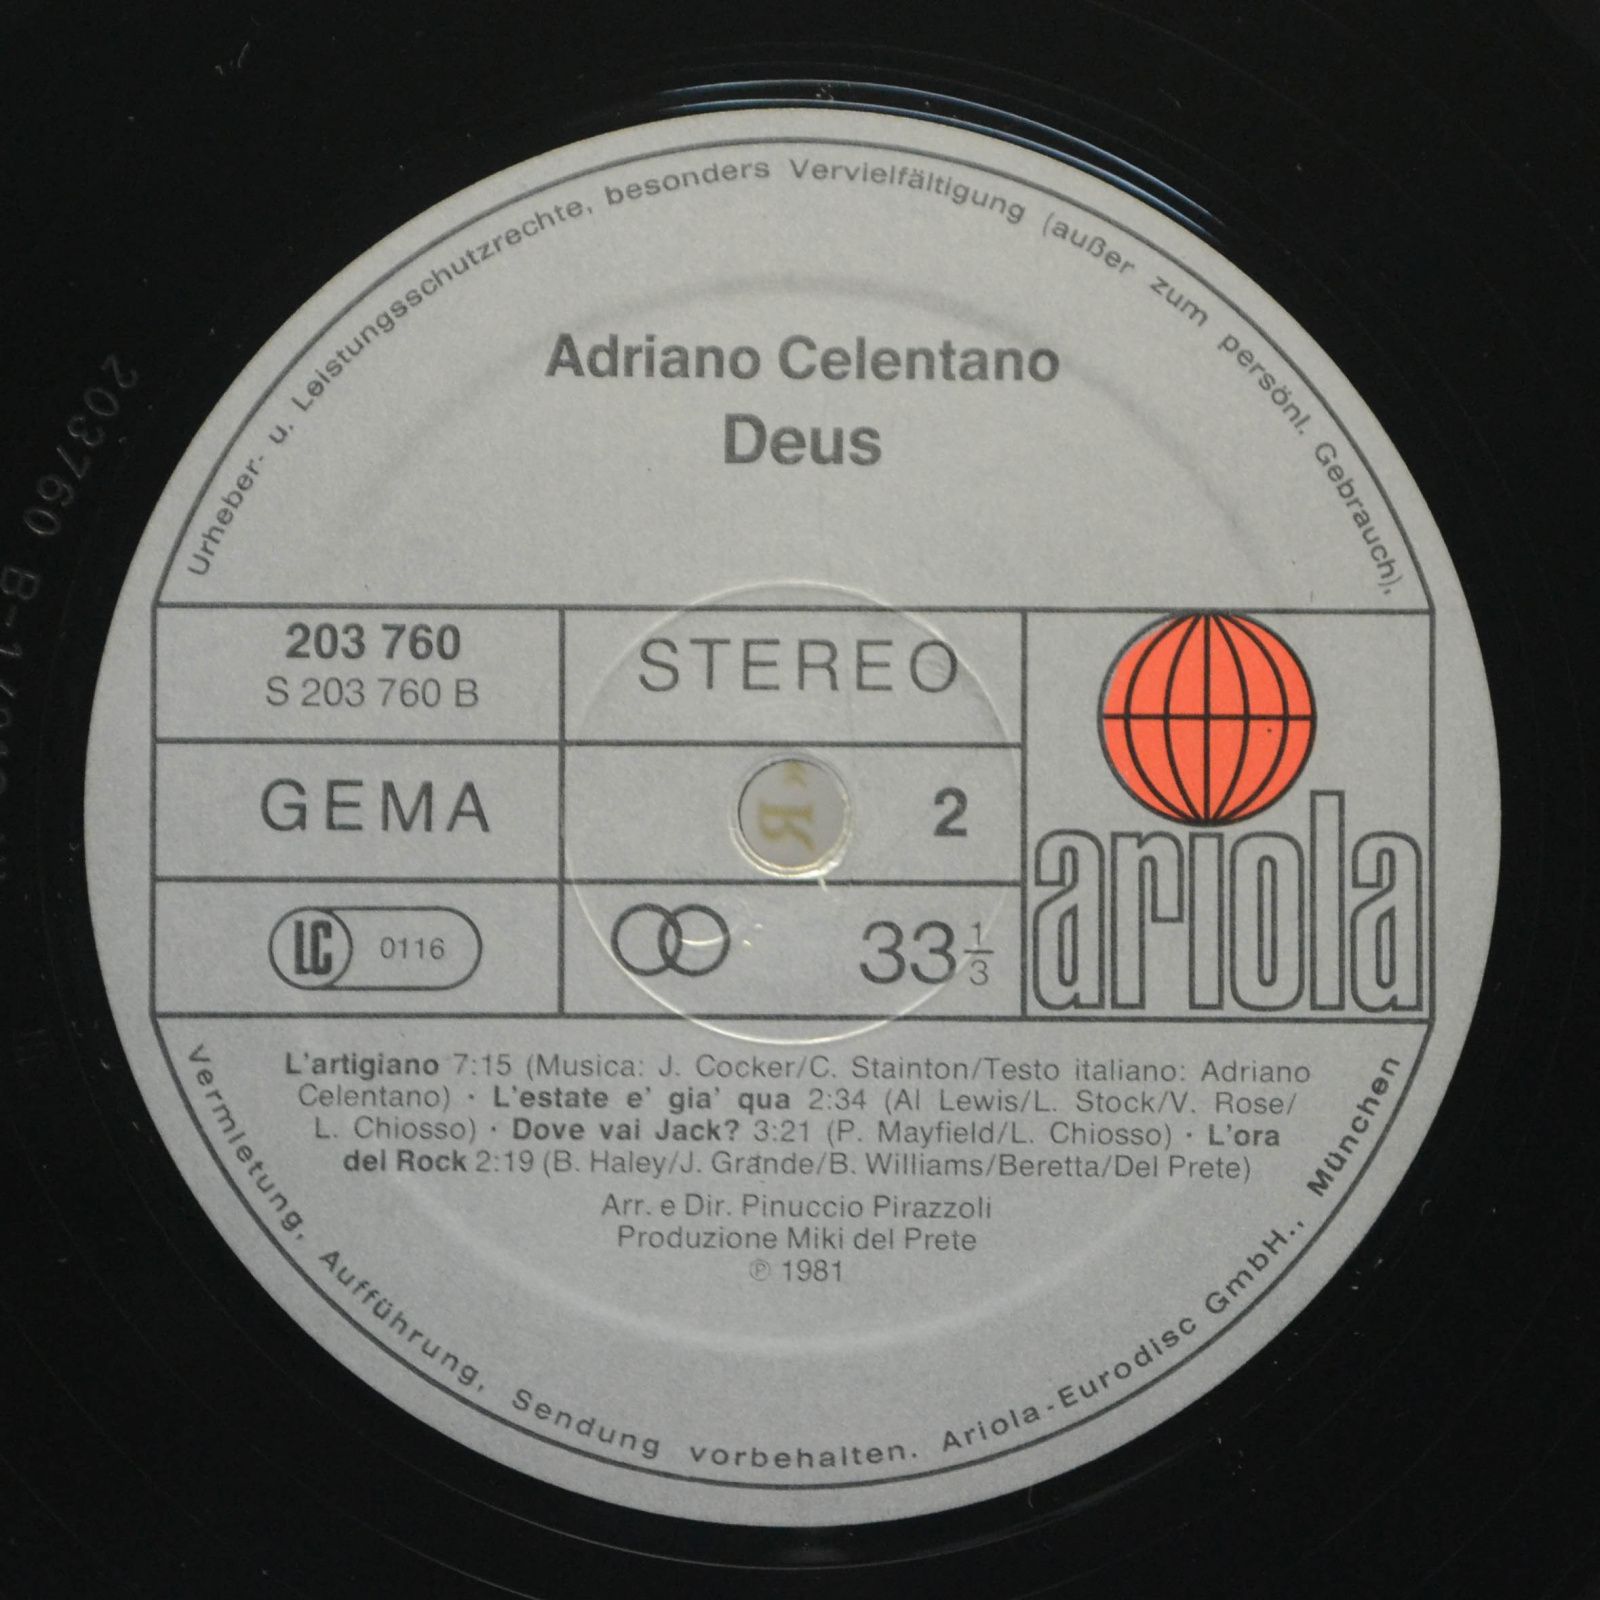 Adriano Celentano — Deus, 1981